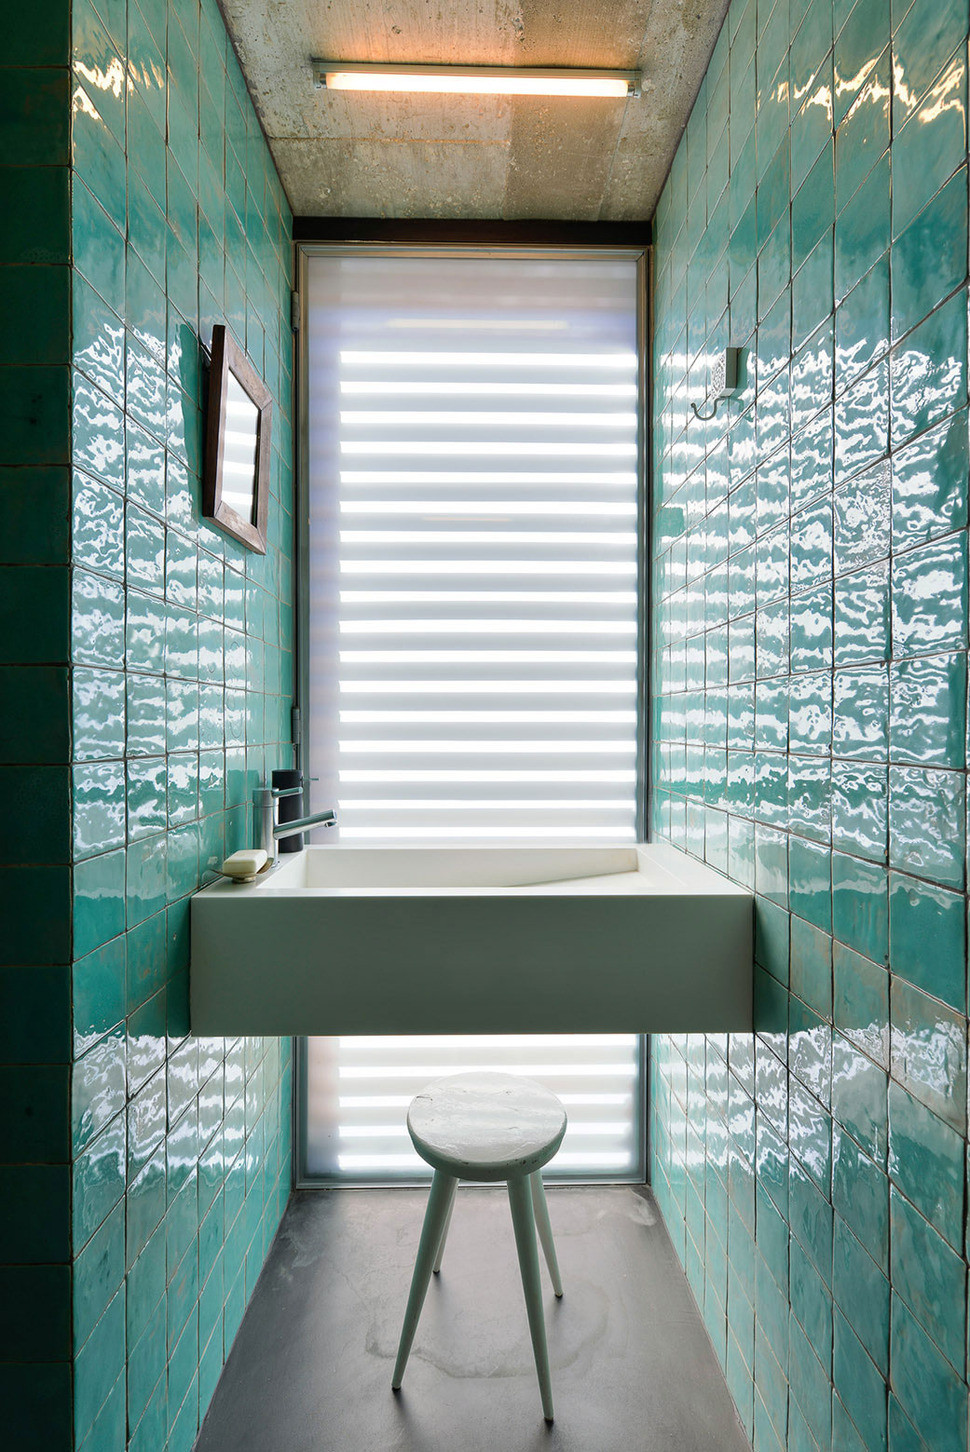 Tile Designs For Bathroom
 Top 10 Tile Design Ideas for a Modern Bathroom for 2015